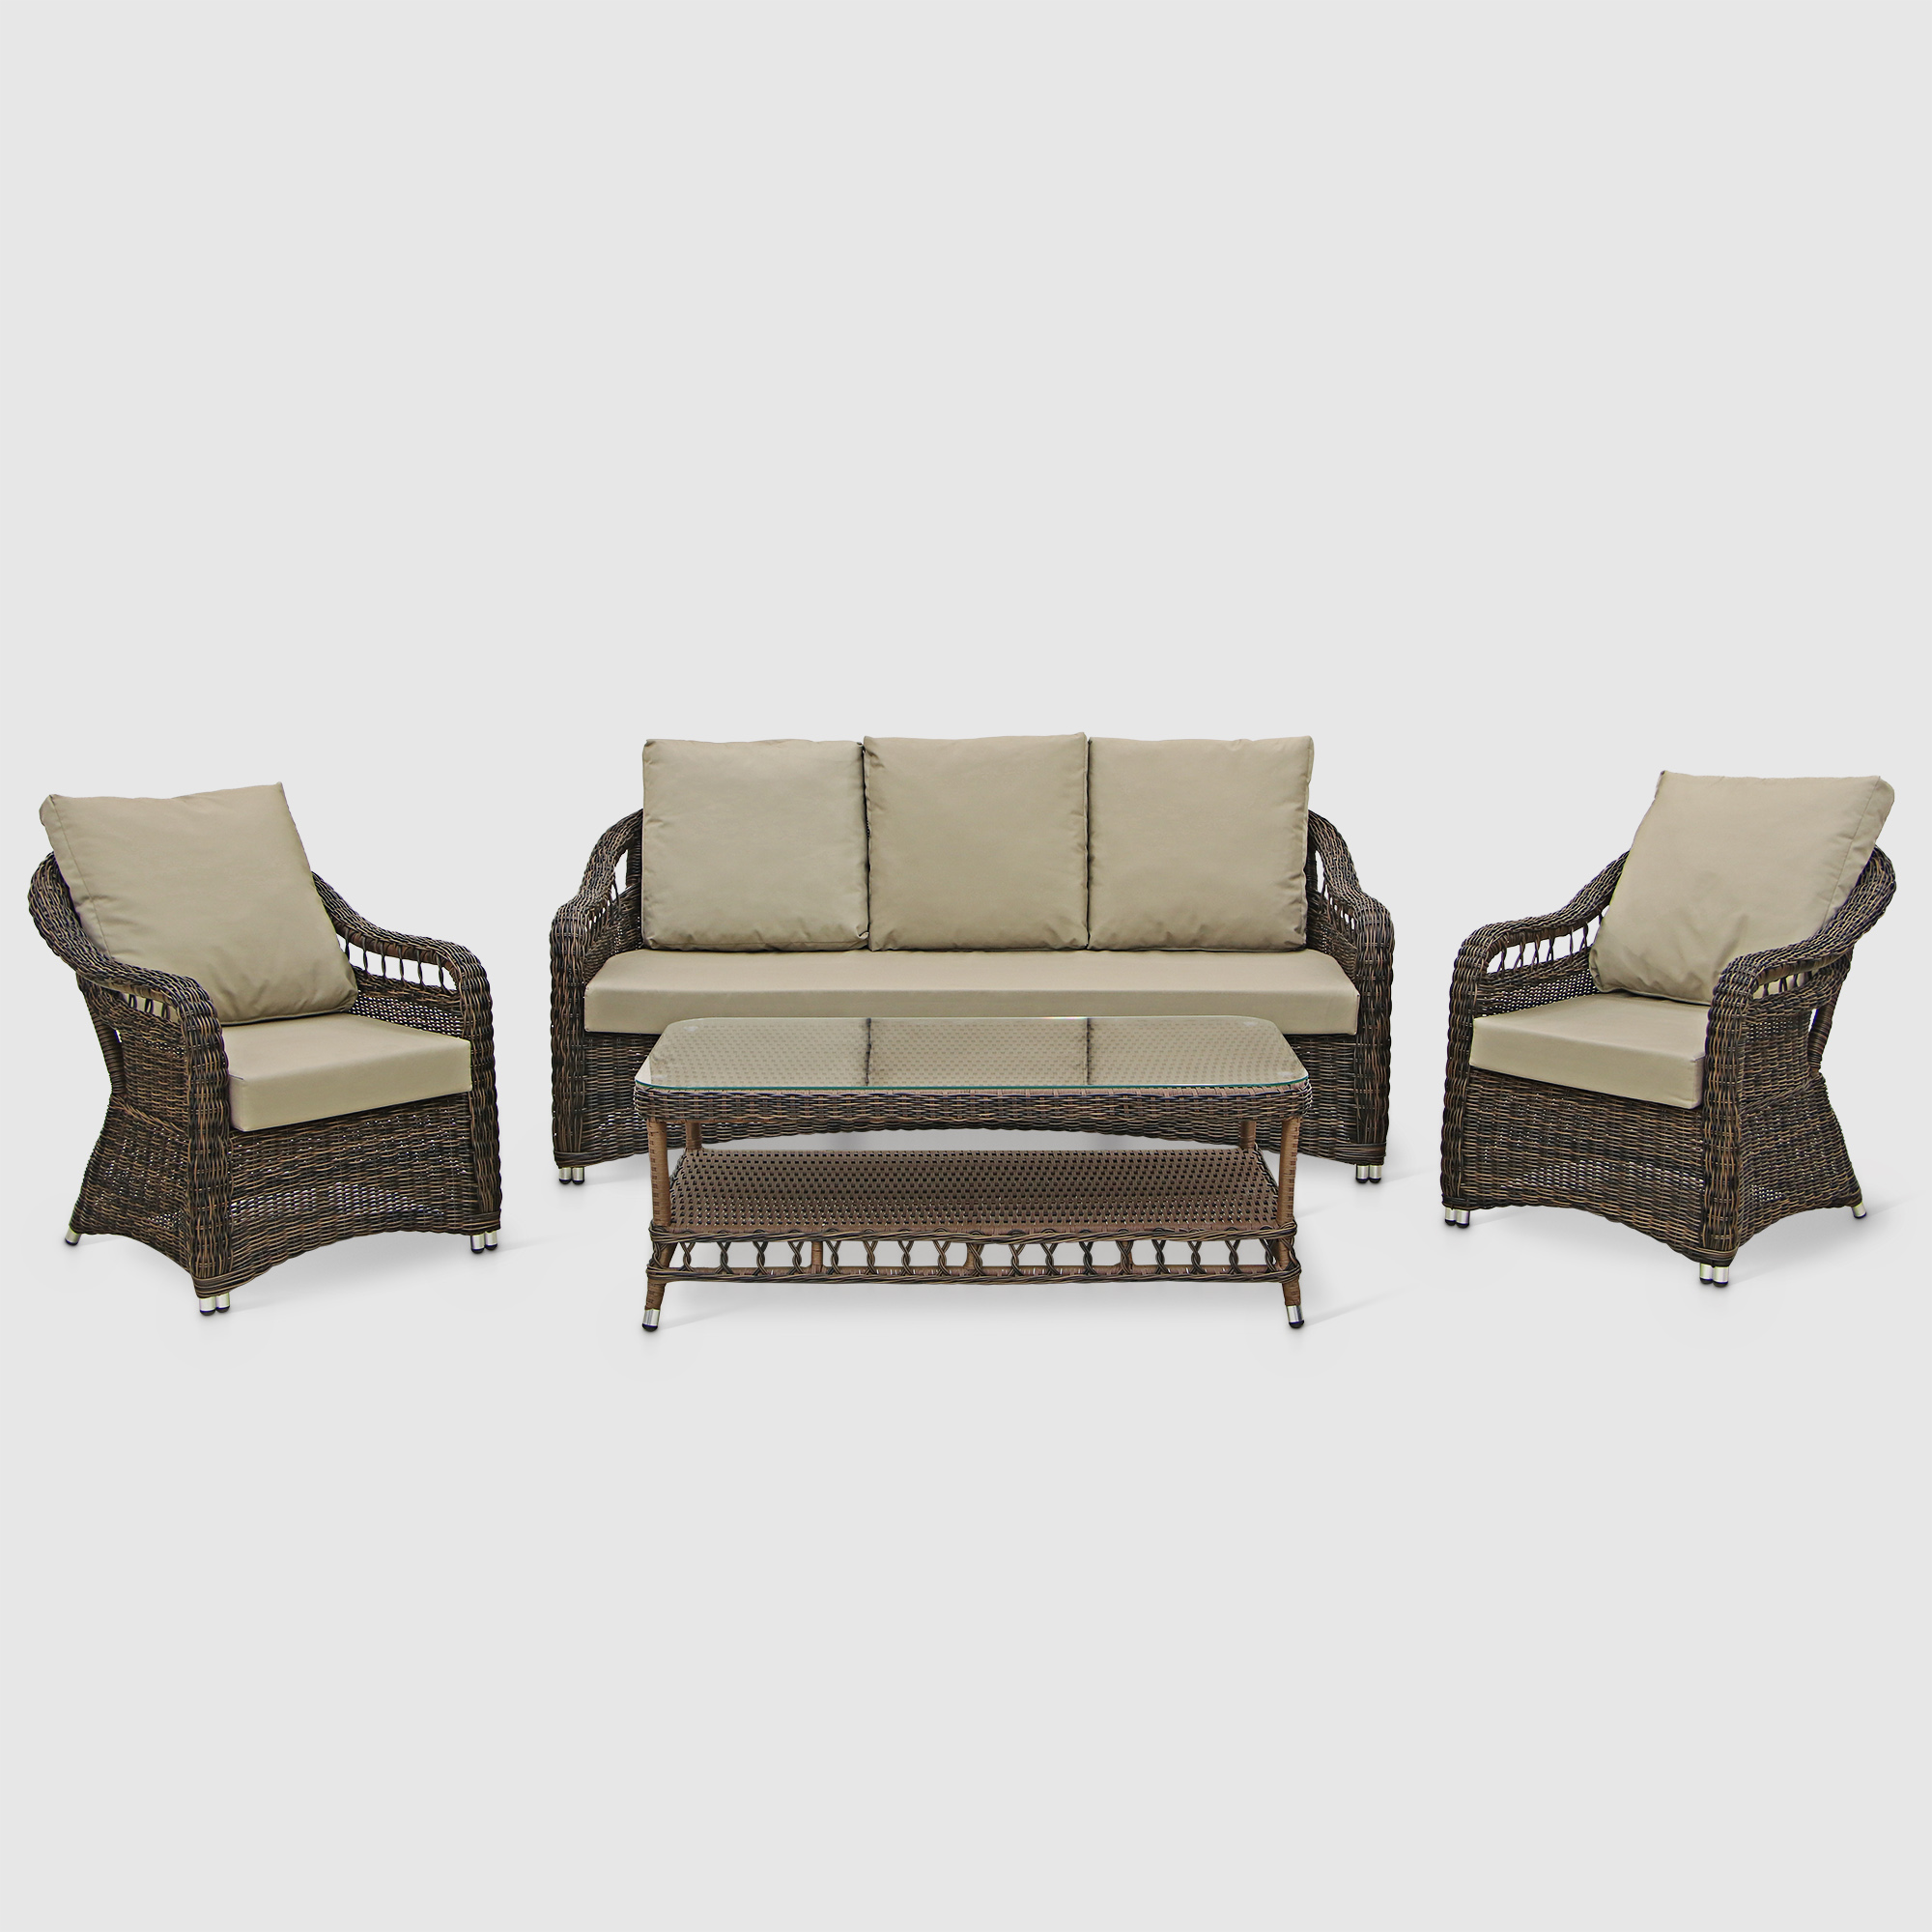 Комплект мебели NS Rattan Sky коричневый с бежевым 4 предмета, цвет бежевый, размер 180х78х78